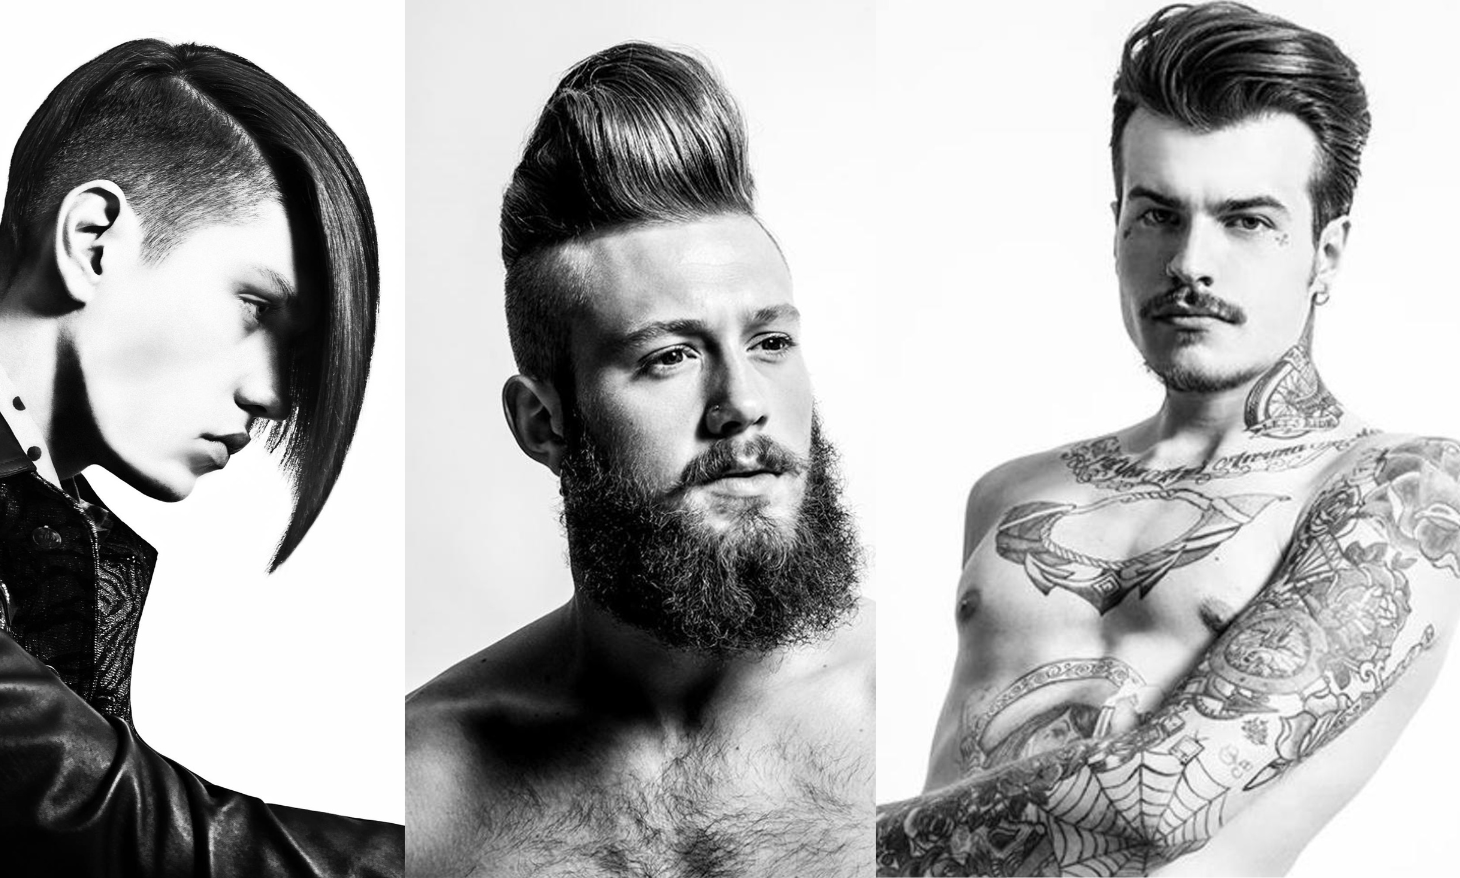 30 Trendiest Men's Fringe Haircuts of 2023 | Haircut Inspiration